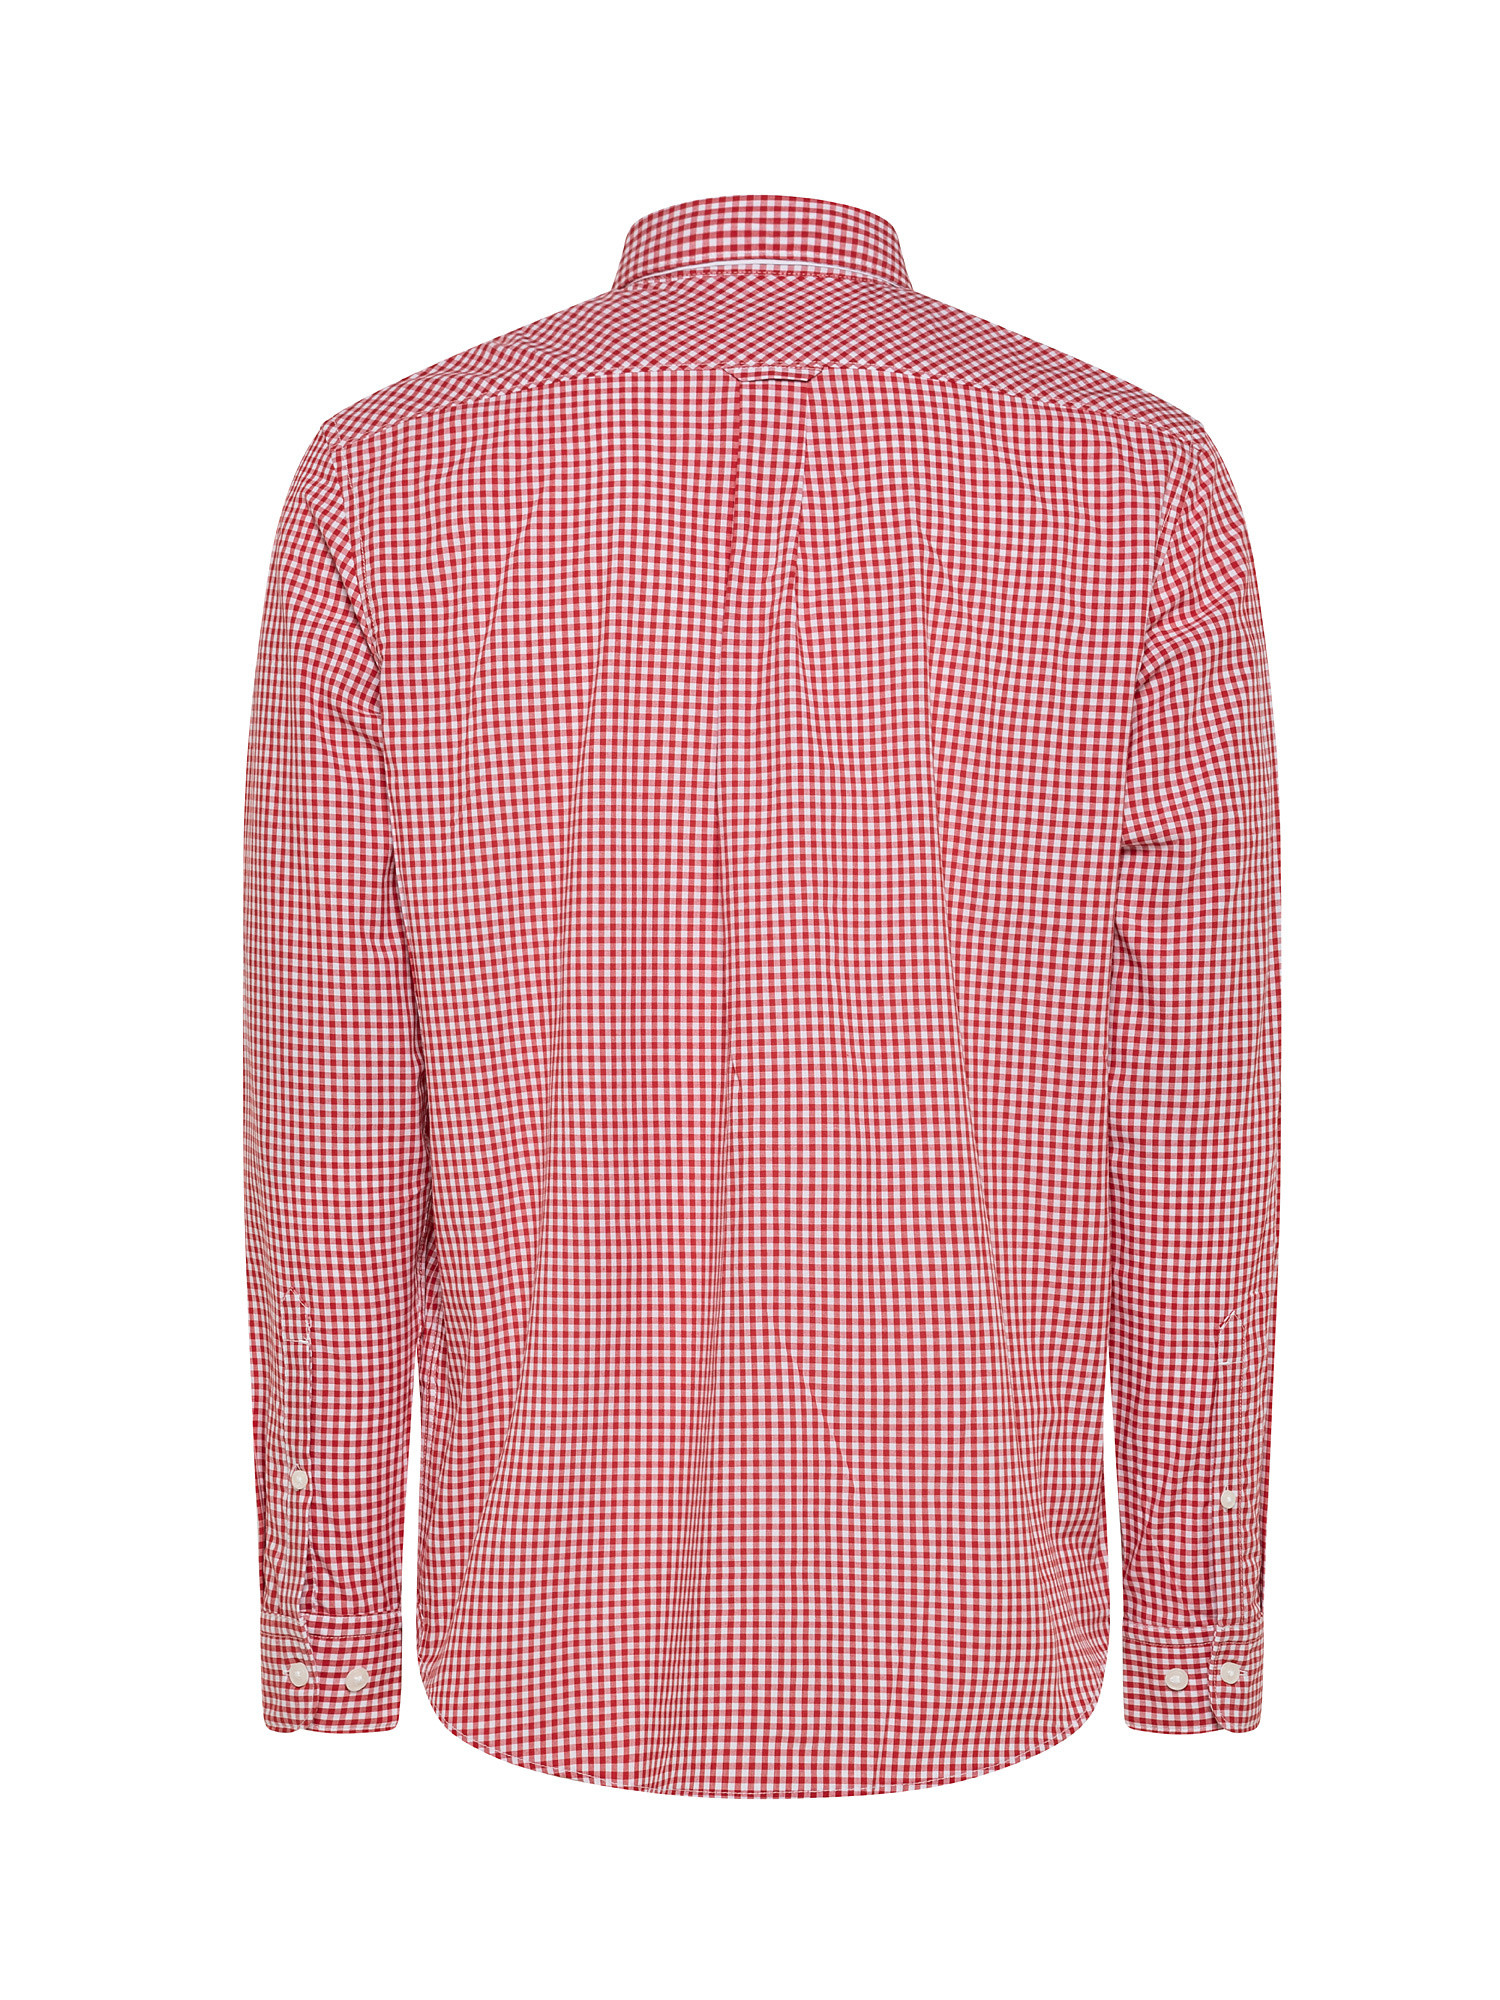 Suncook River Gingham shirt for men, Red, large image number 1